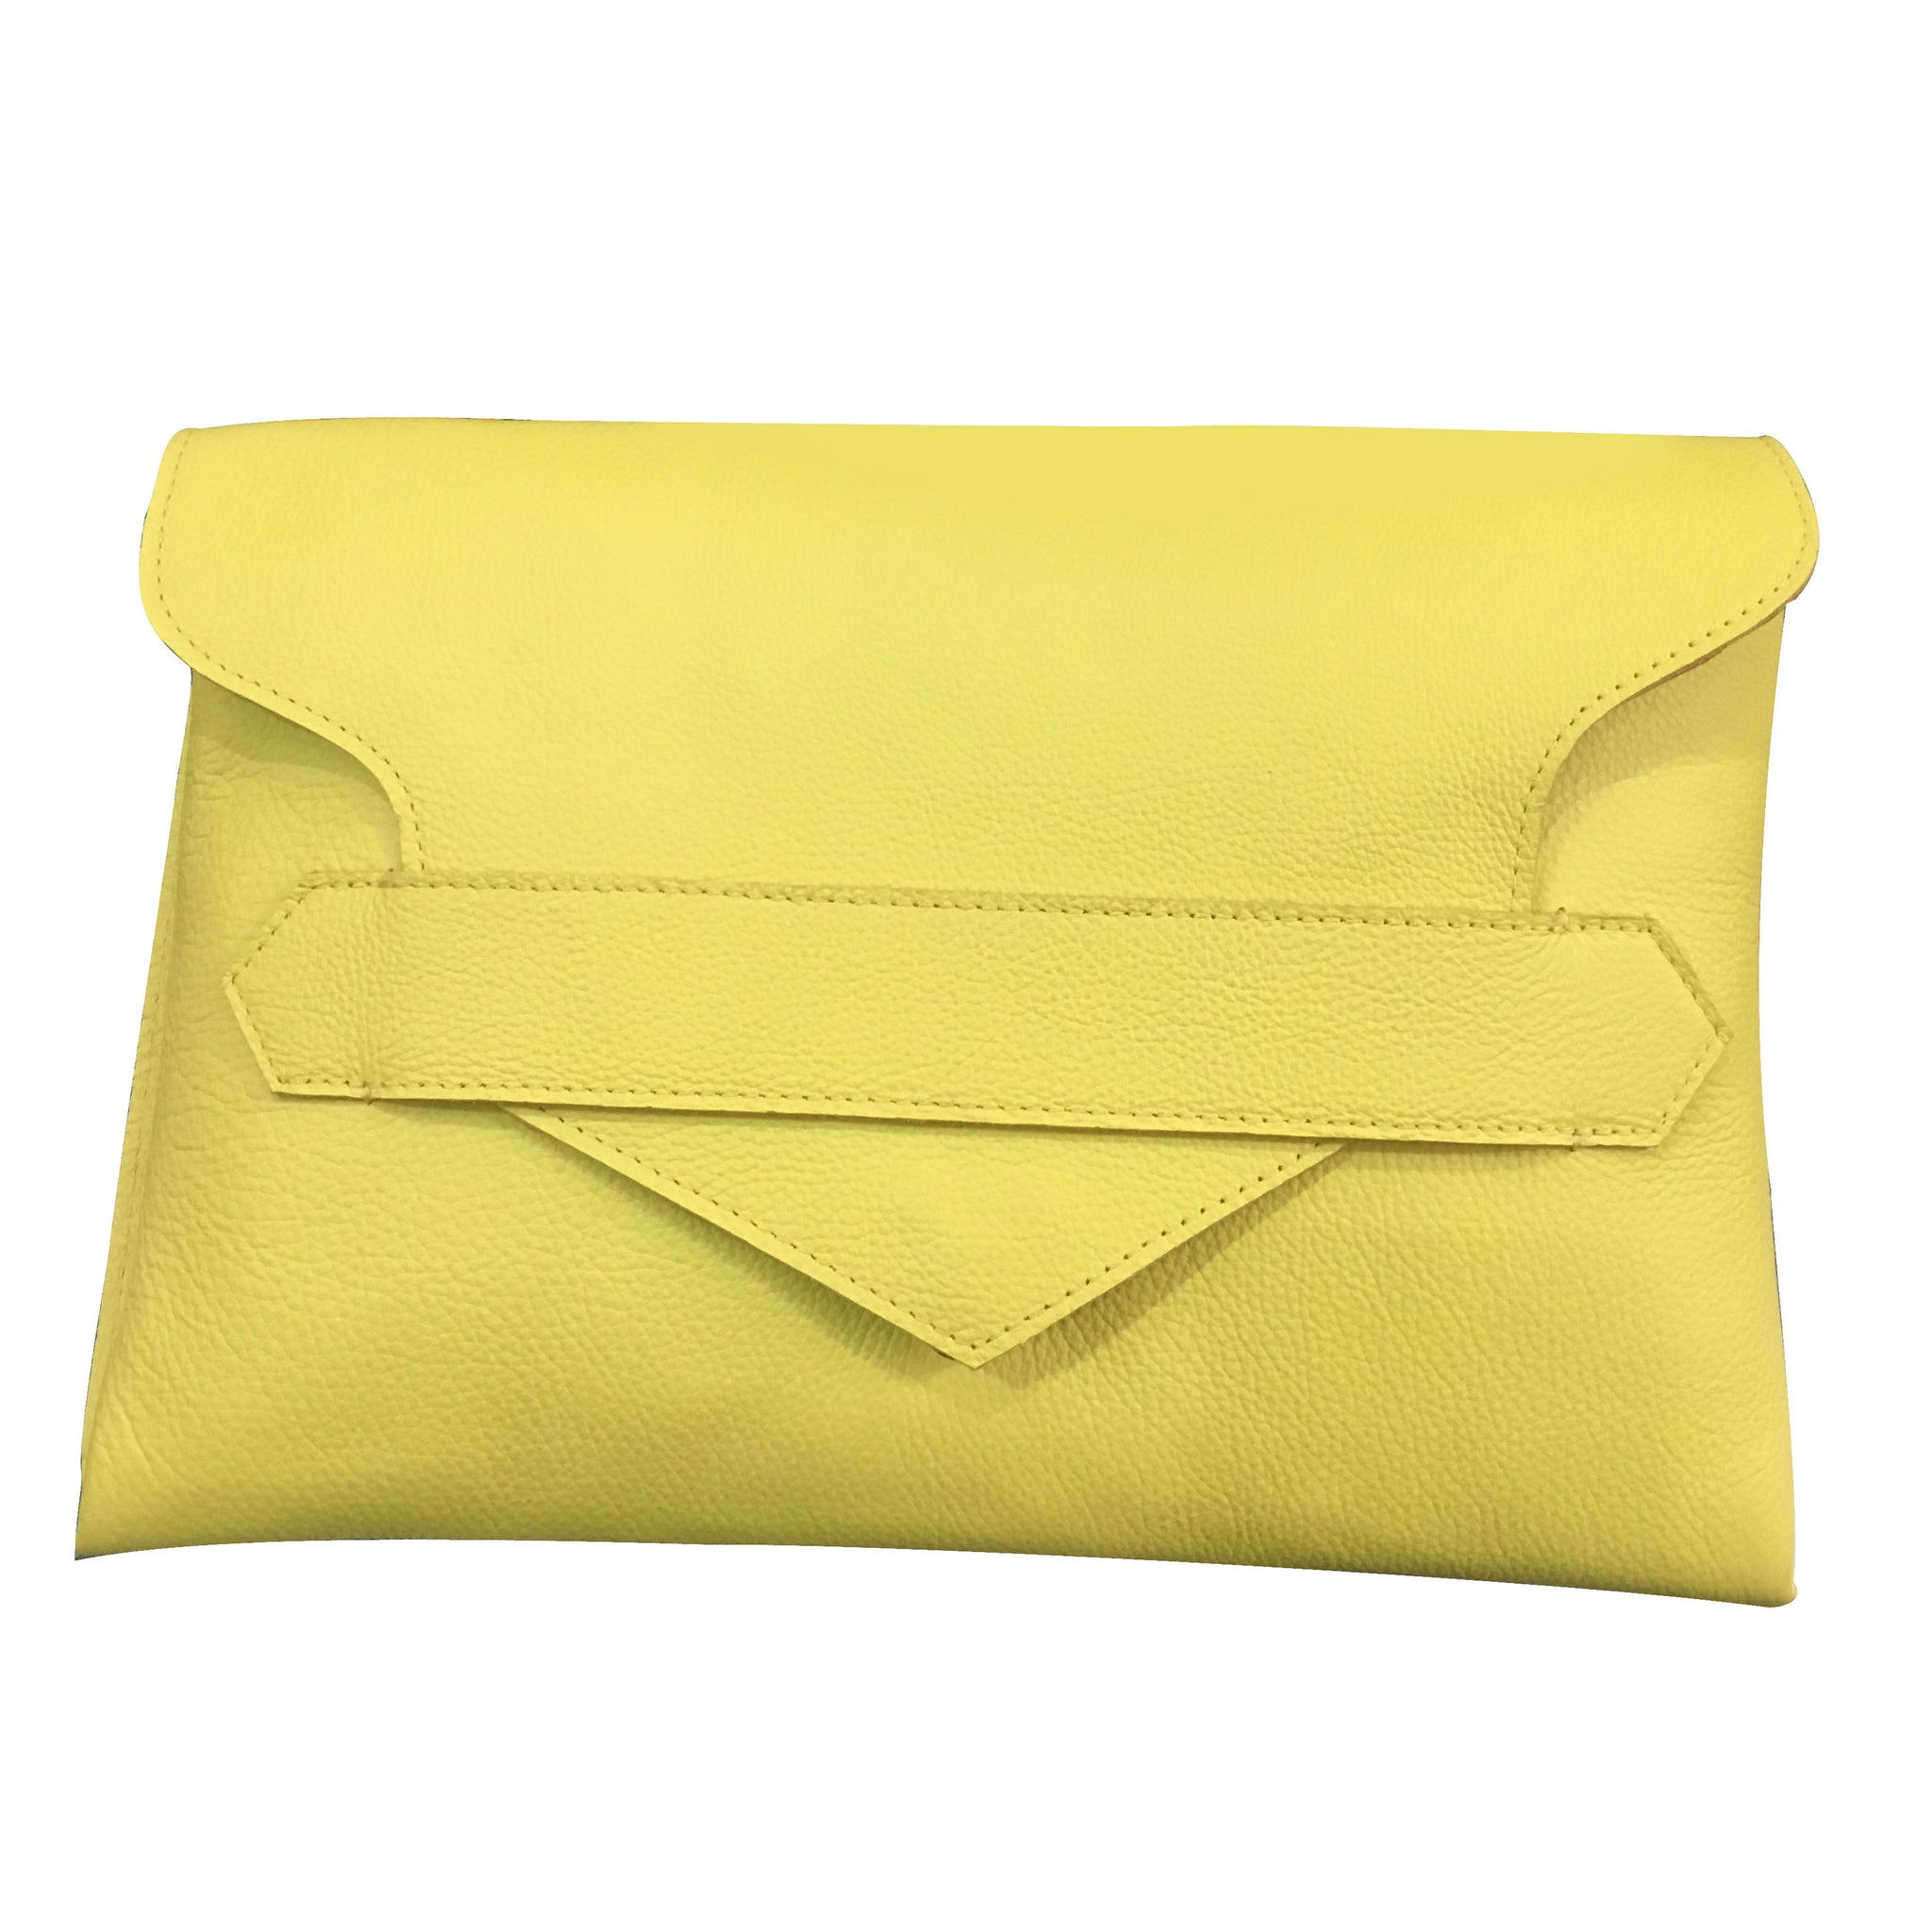 Vintage Patent Leather Clutch Purse Handbag Fold Over Mustard Triple Ring  Design | eBay